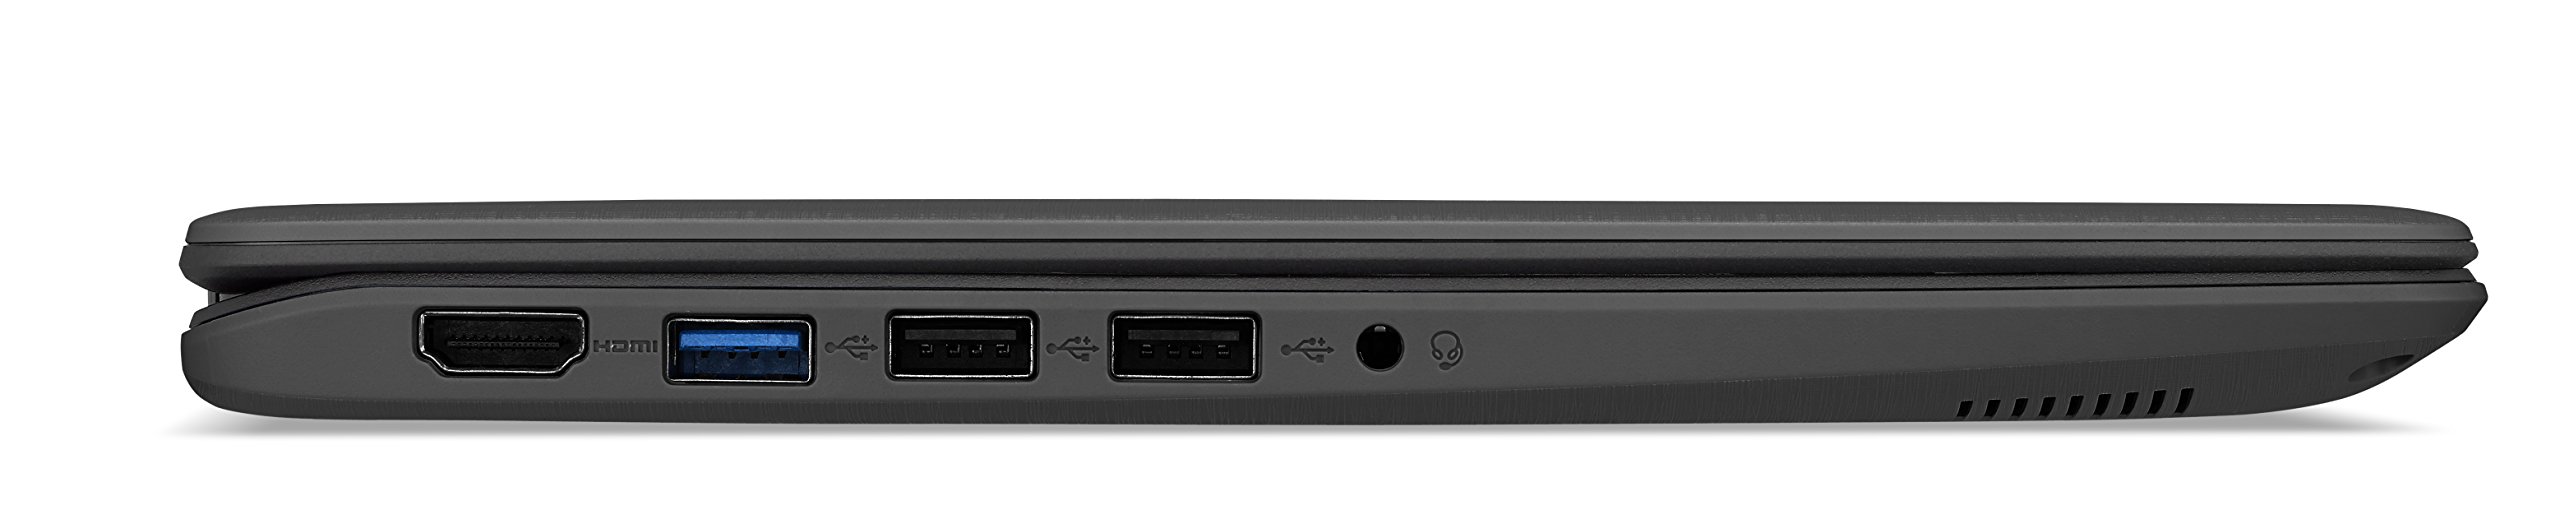 Acer SP111-31N-C4UG Spin 1, 11.6" Full HD Touch, 2 in 1 Laptop, Celeron N3350, 4GB DDR3L, 32GB Storage, Office 365, Stylus, Obsidian Black